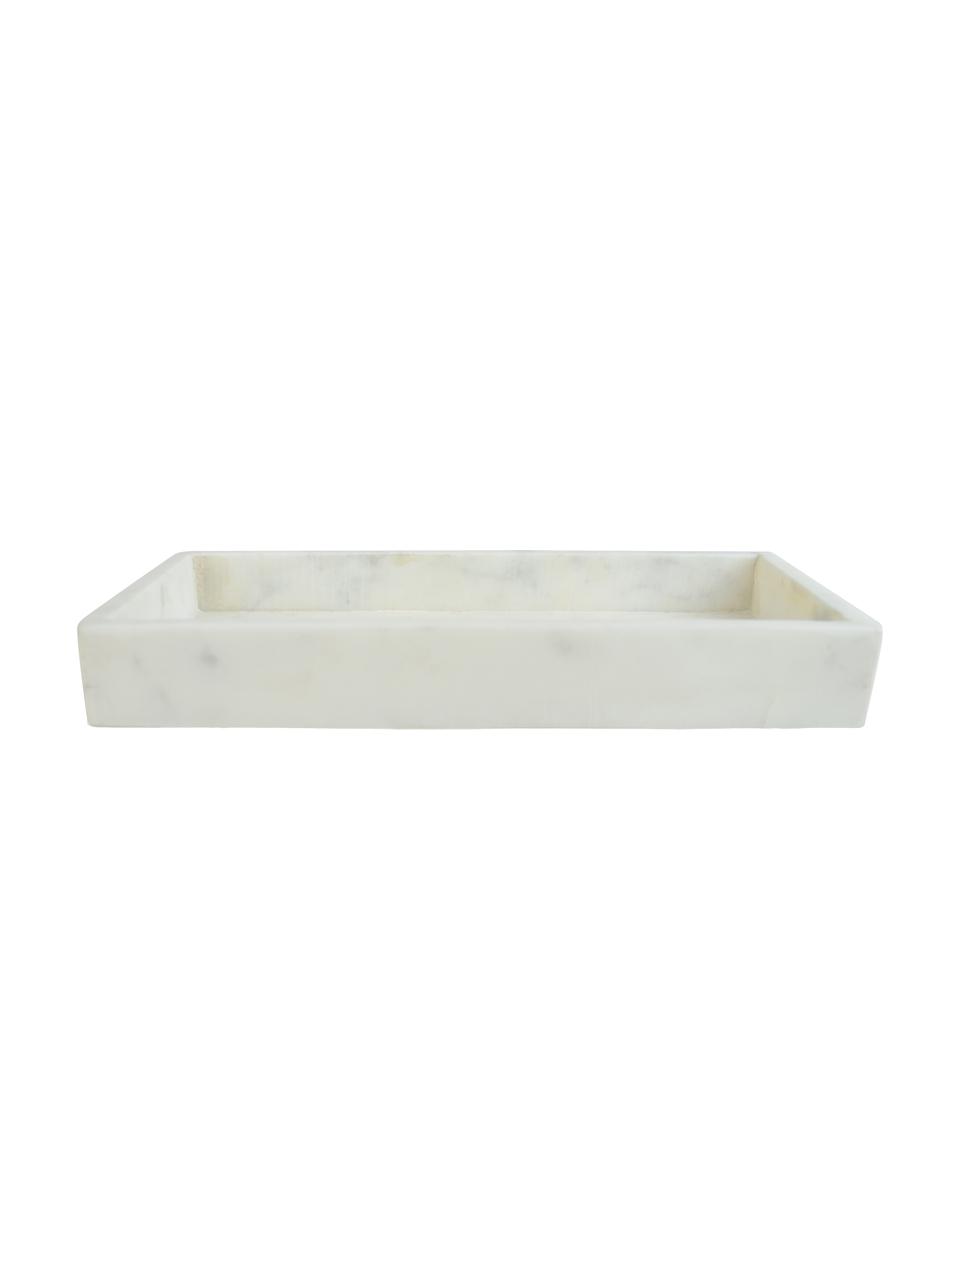 Deko-Marmor-Tablett Mera, Marmor, Weiß, marmoriert, B 30 x T 15 cm